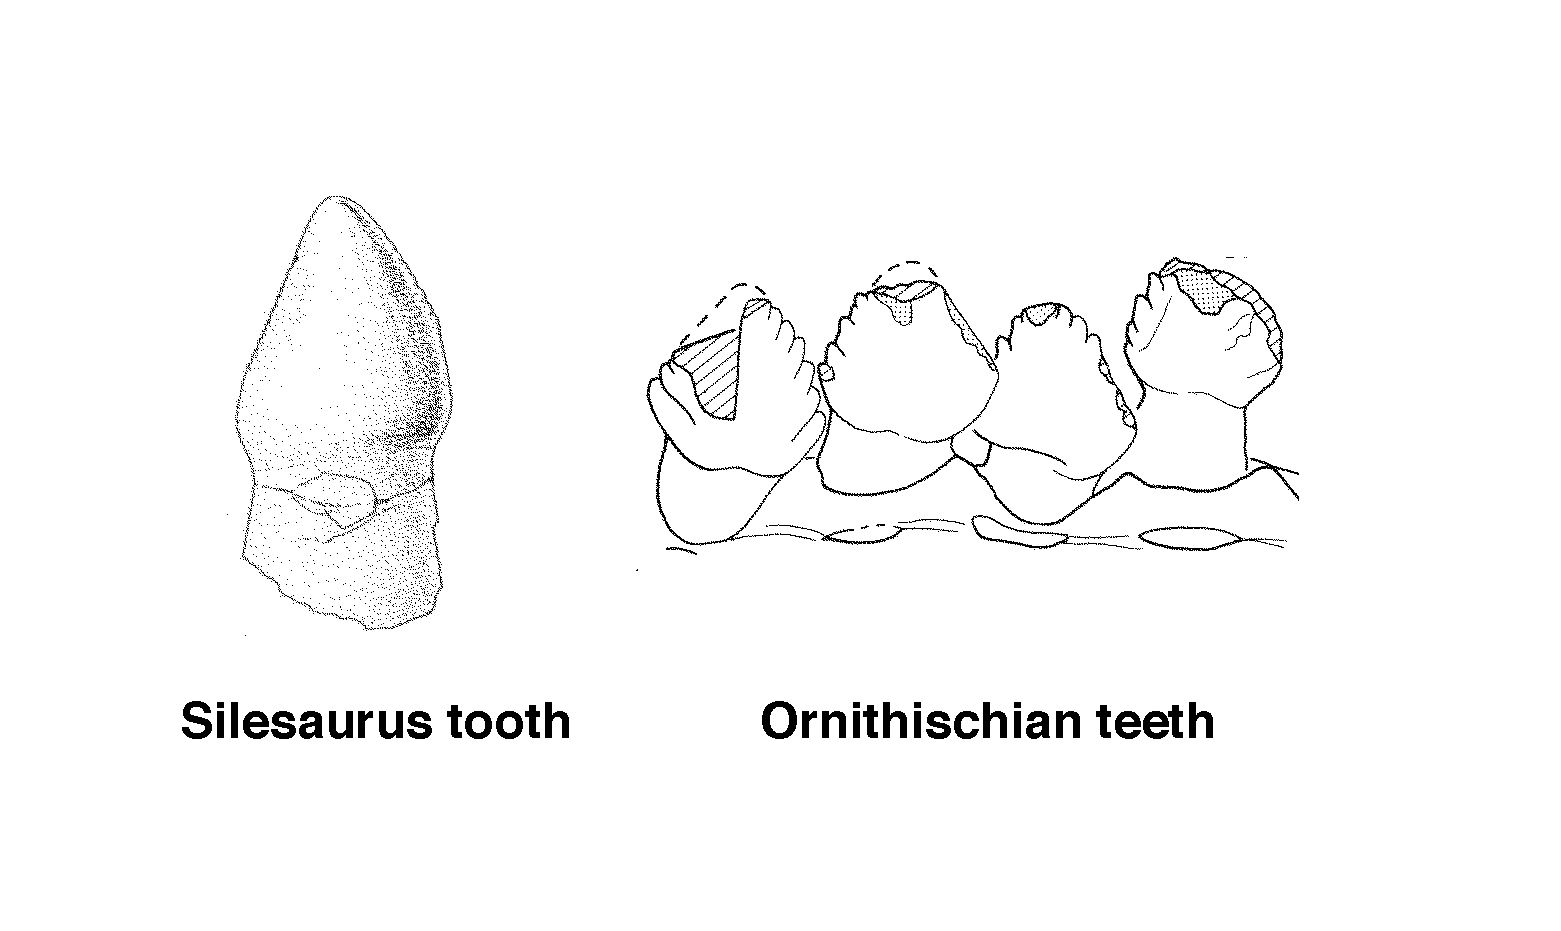 Illustration of teeth from Silesaurus and Ornithischian